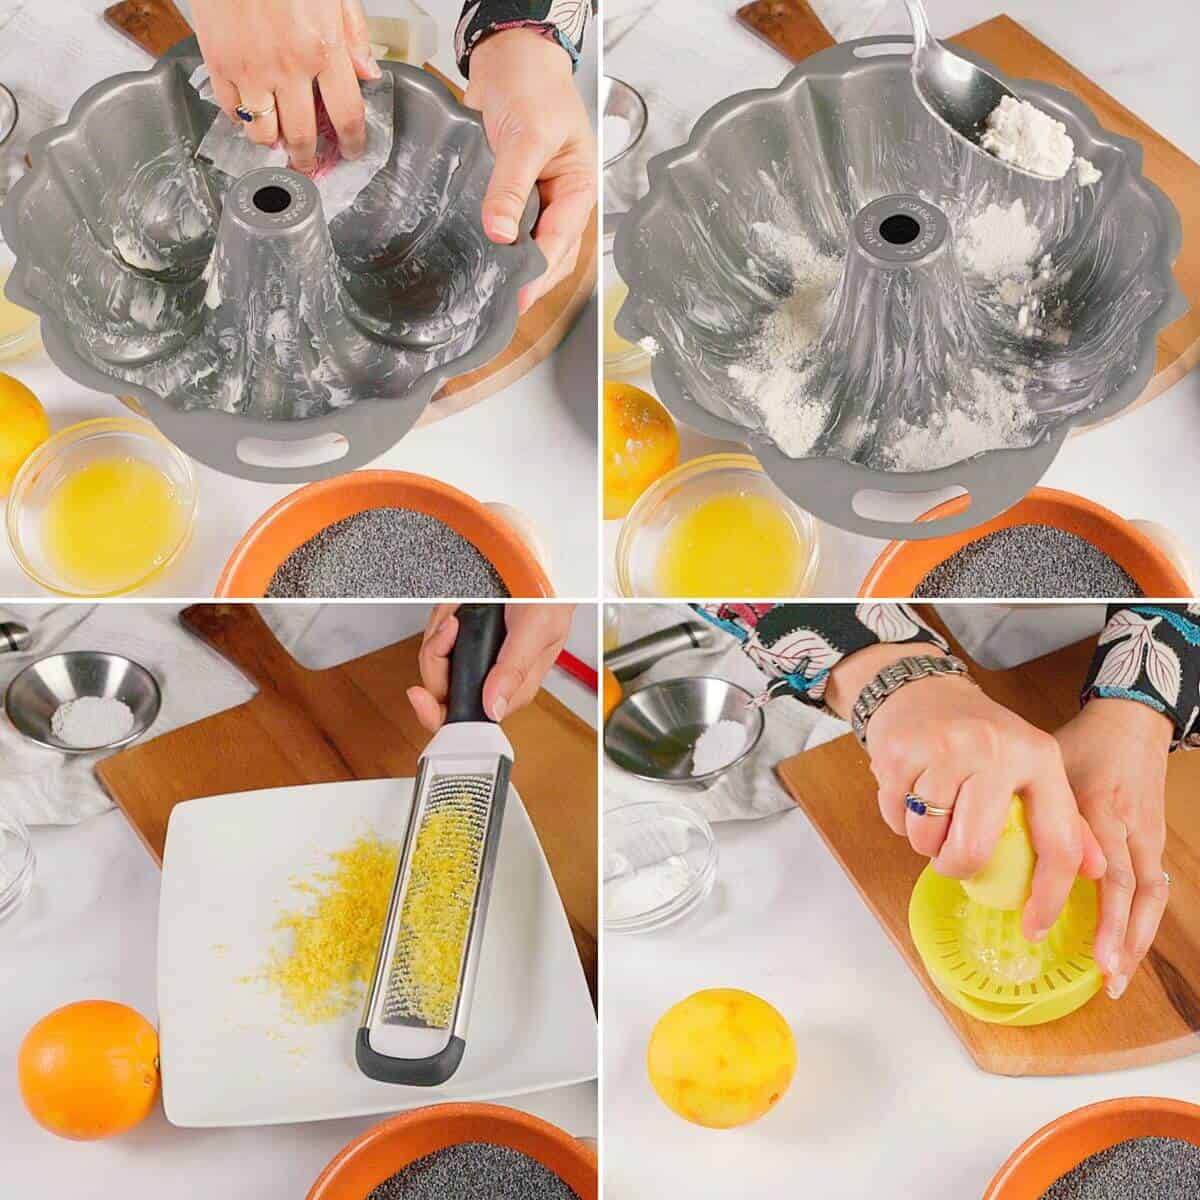 Prepare the baking pan, citrus zest and juice.